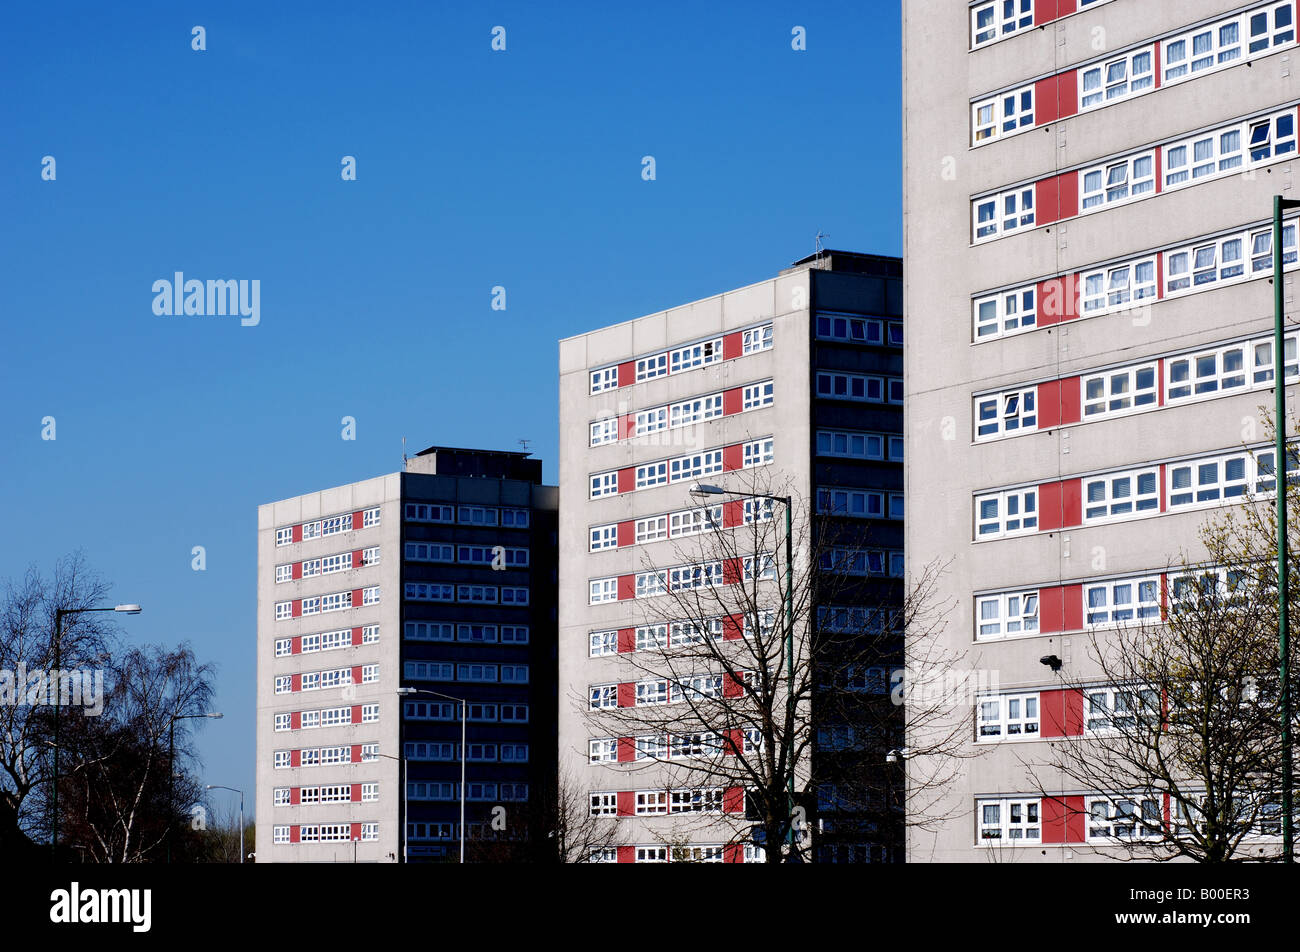 High rise flats, Chelmsley Wood, West Midlands, England, UK Stock Photo